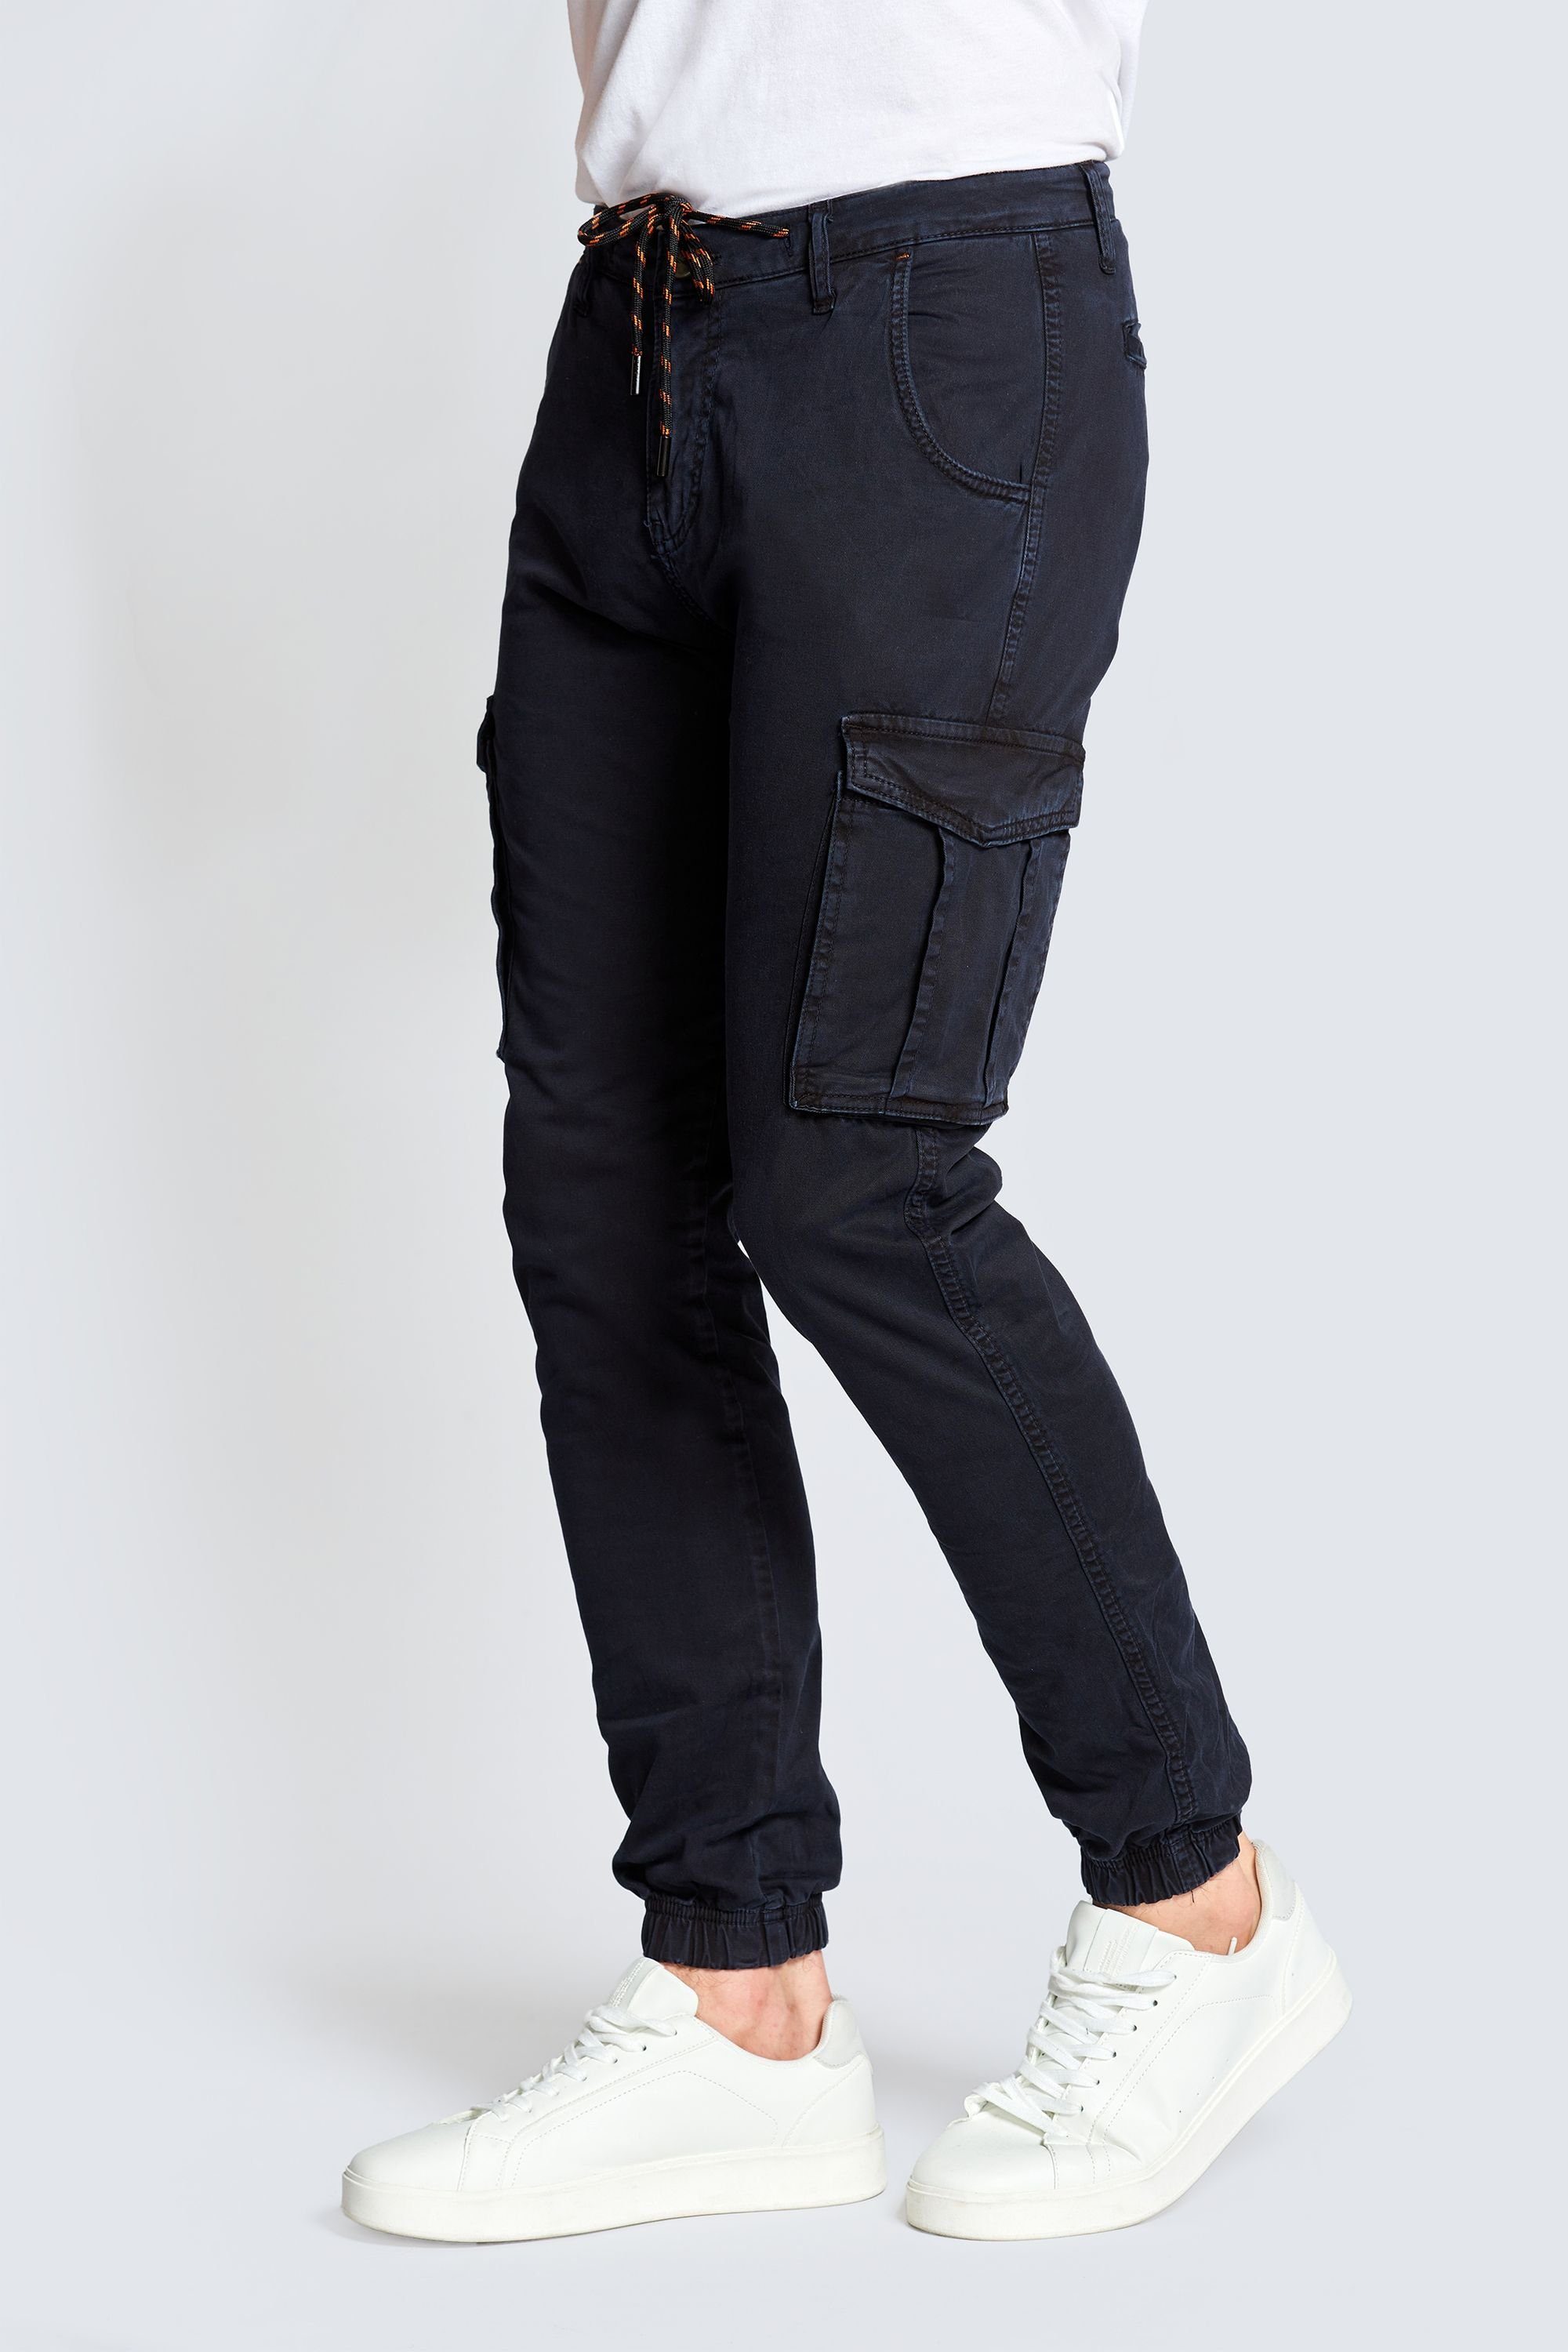 Black 5-Pocket-Jeans angenehmer MICHA Hose Zhrill Cargo Tragekomfort